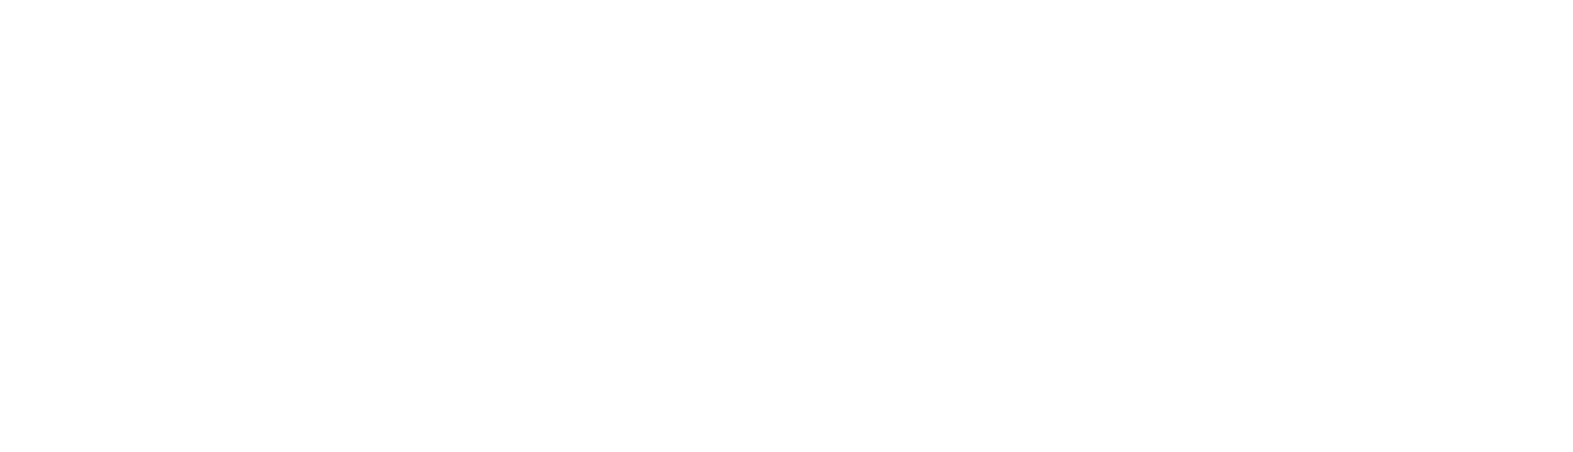 Smartech Nexus Logo